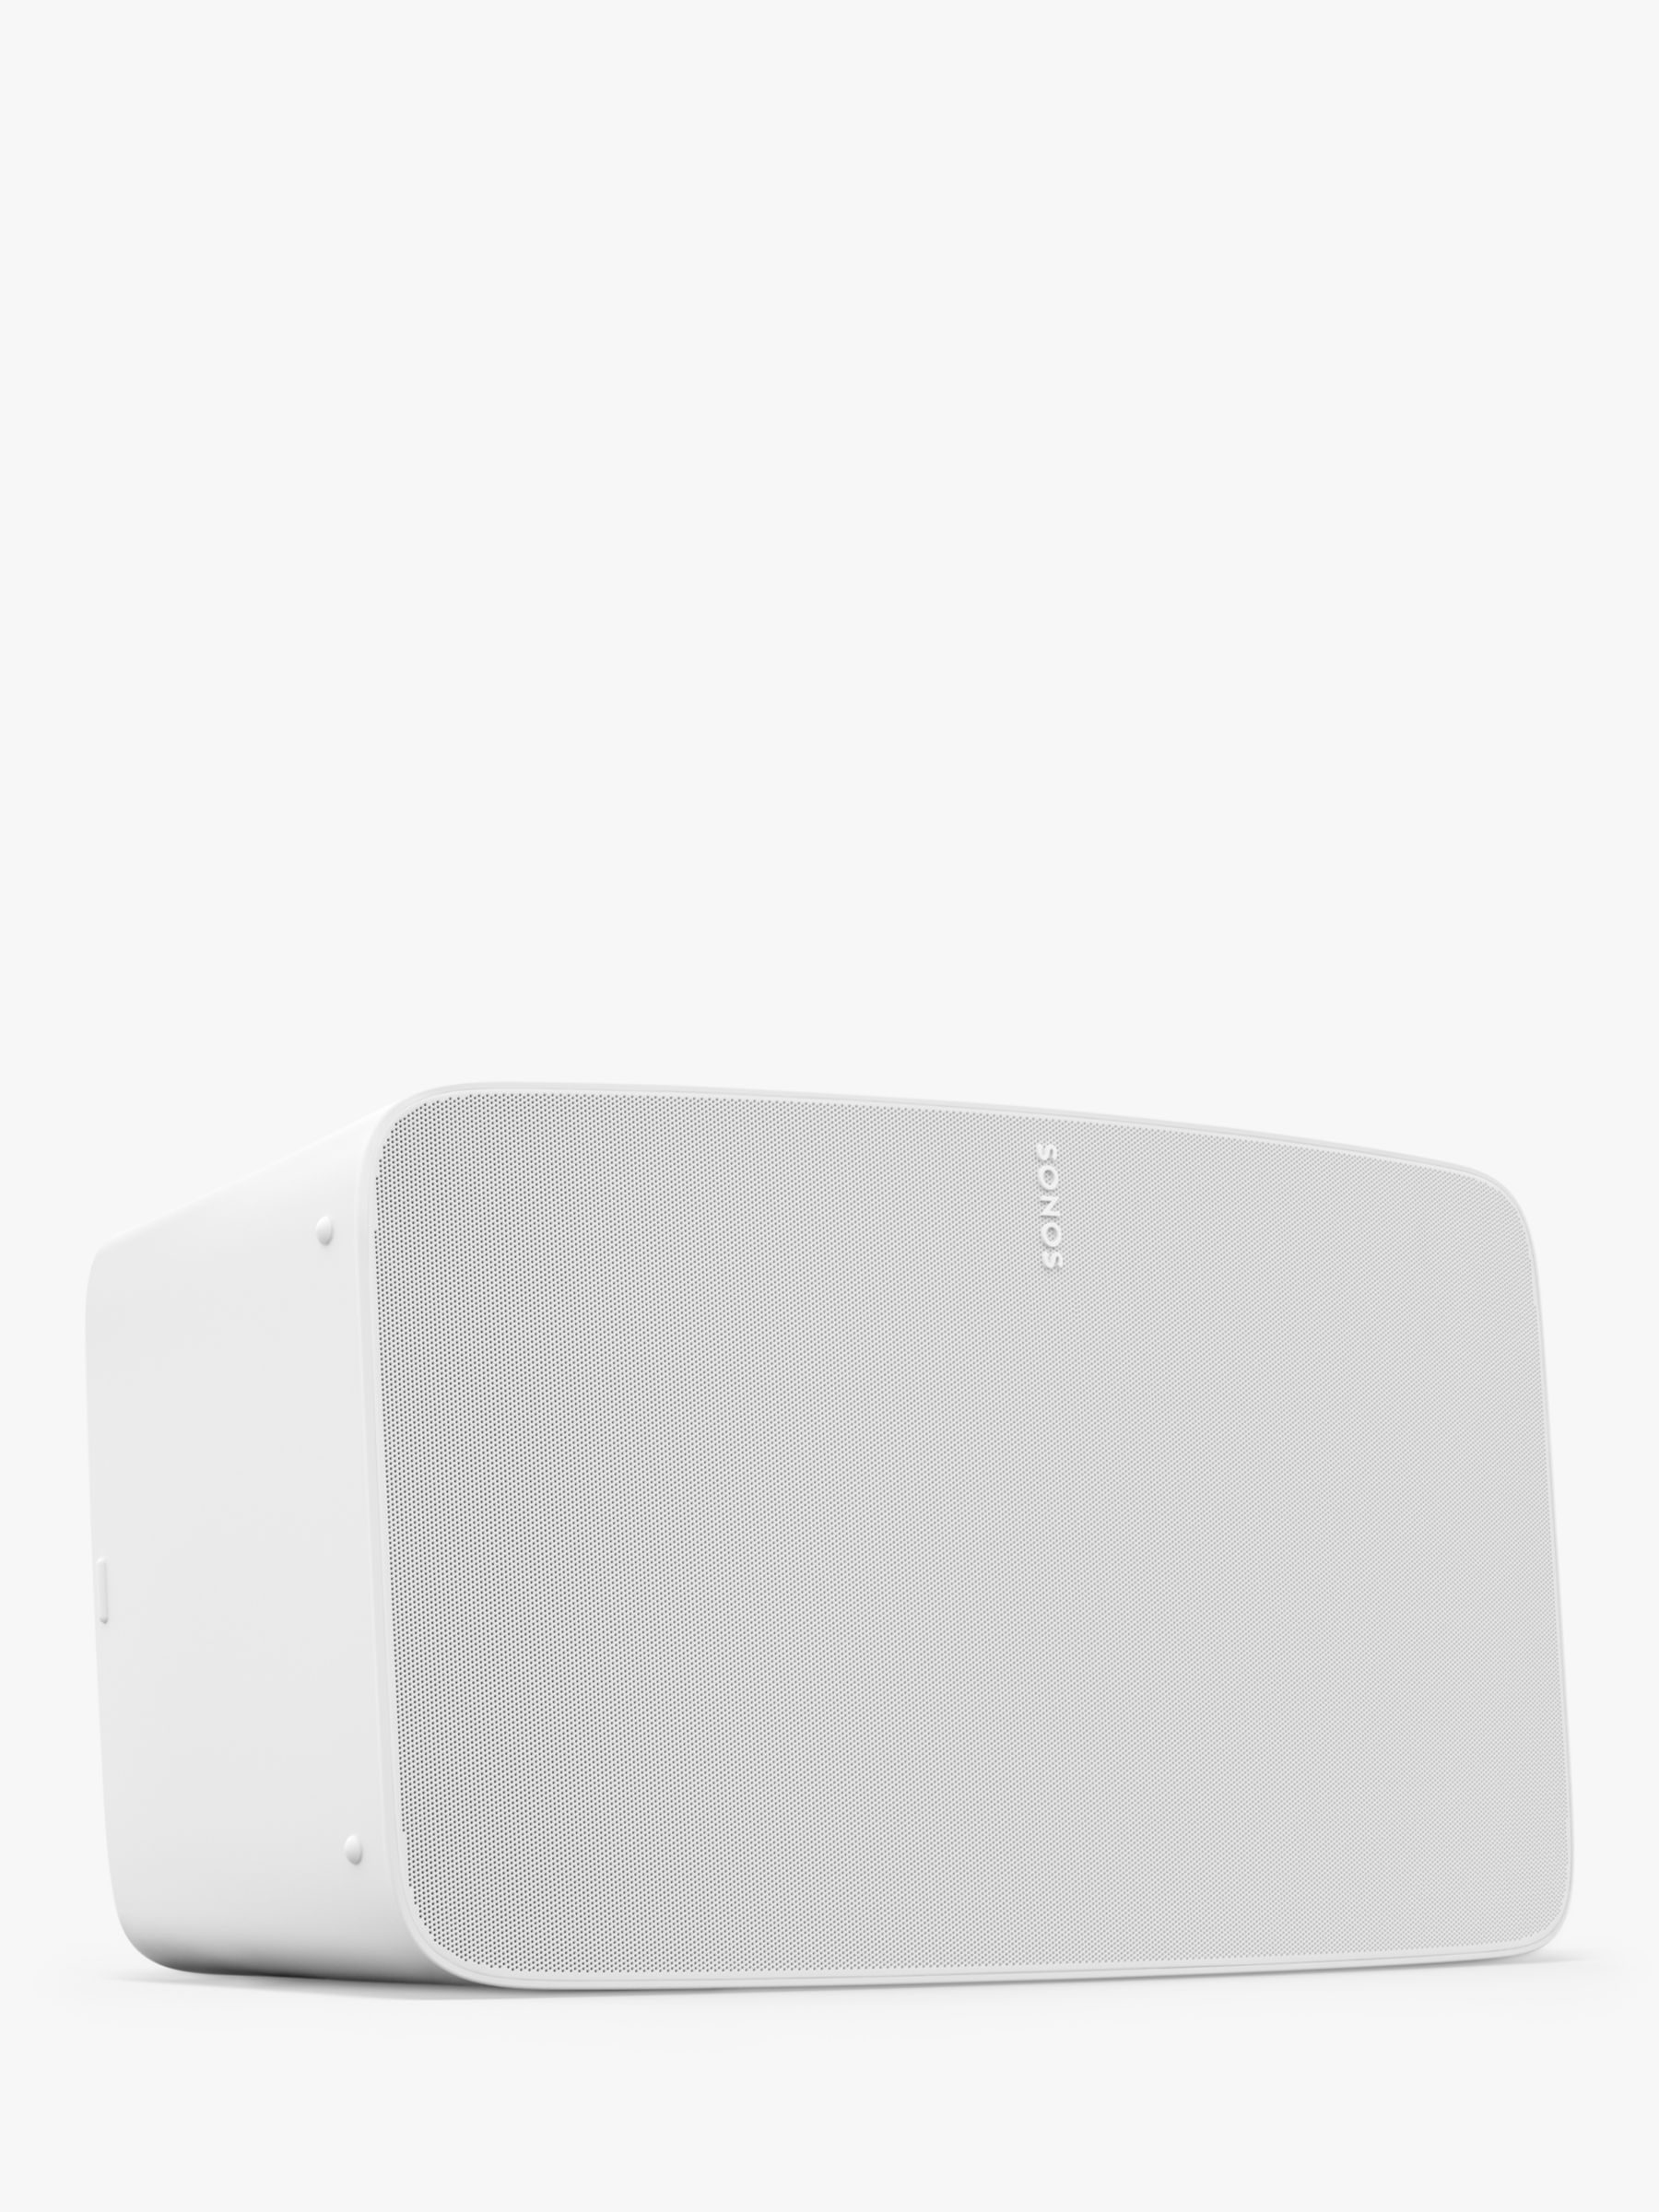 Temerity kontakt mor Sonos Five Smart Speaker, White